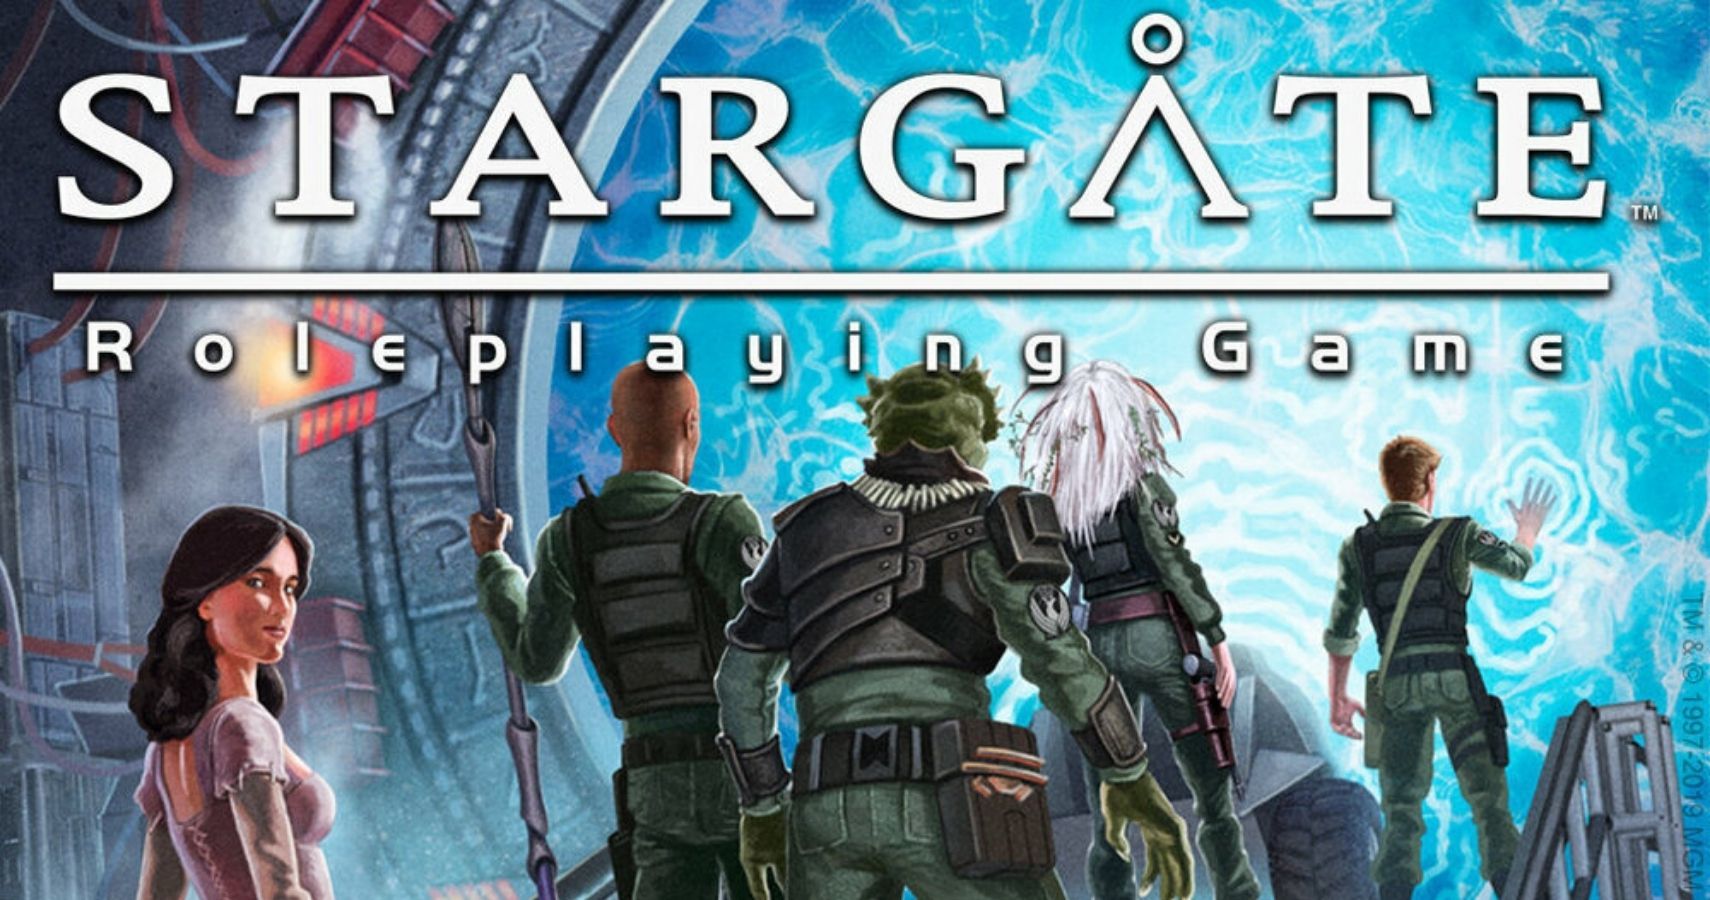 Stargate Tabletop RPG Kickstarter Announcement feature image